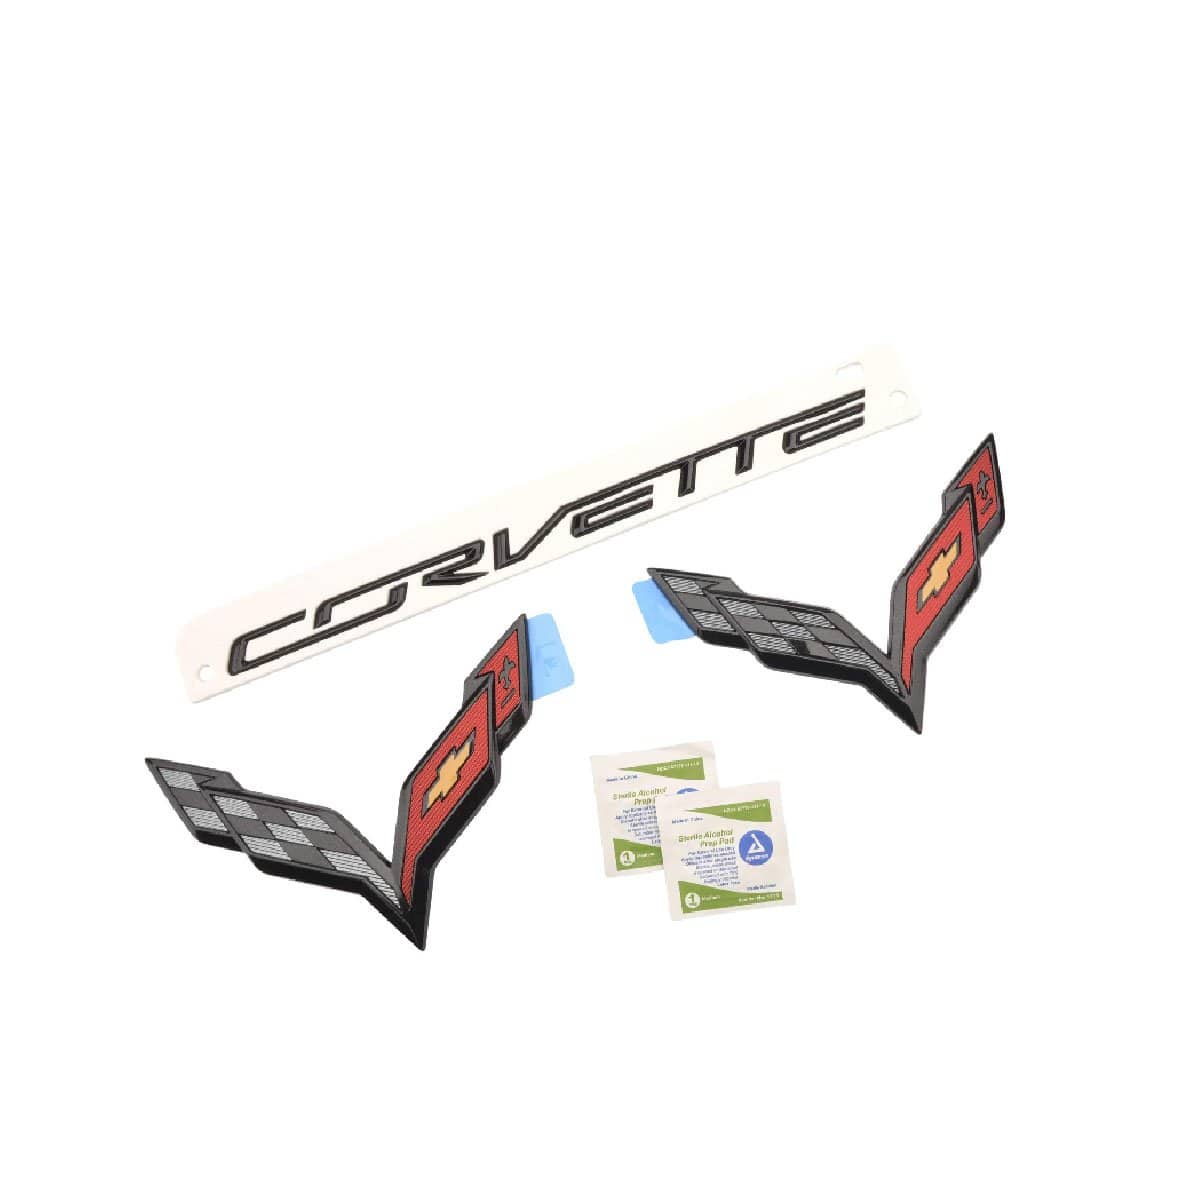 C7 Corvette Carbon Flash Metallic Black Emblem Kit [45-4-130|45-4-133]CFZ for Z06, Grand Sport, and Stingray models by ACS Composite.